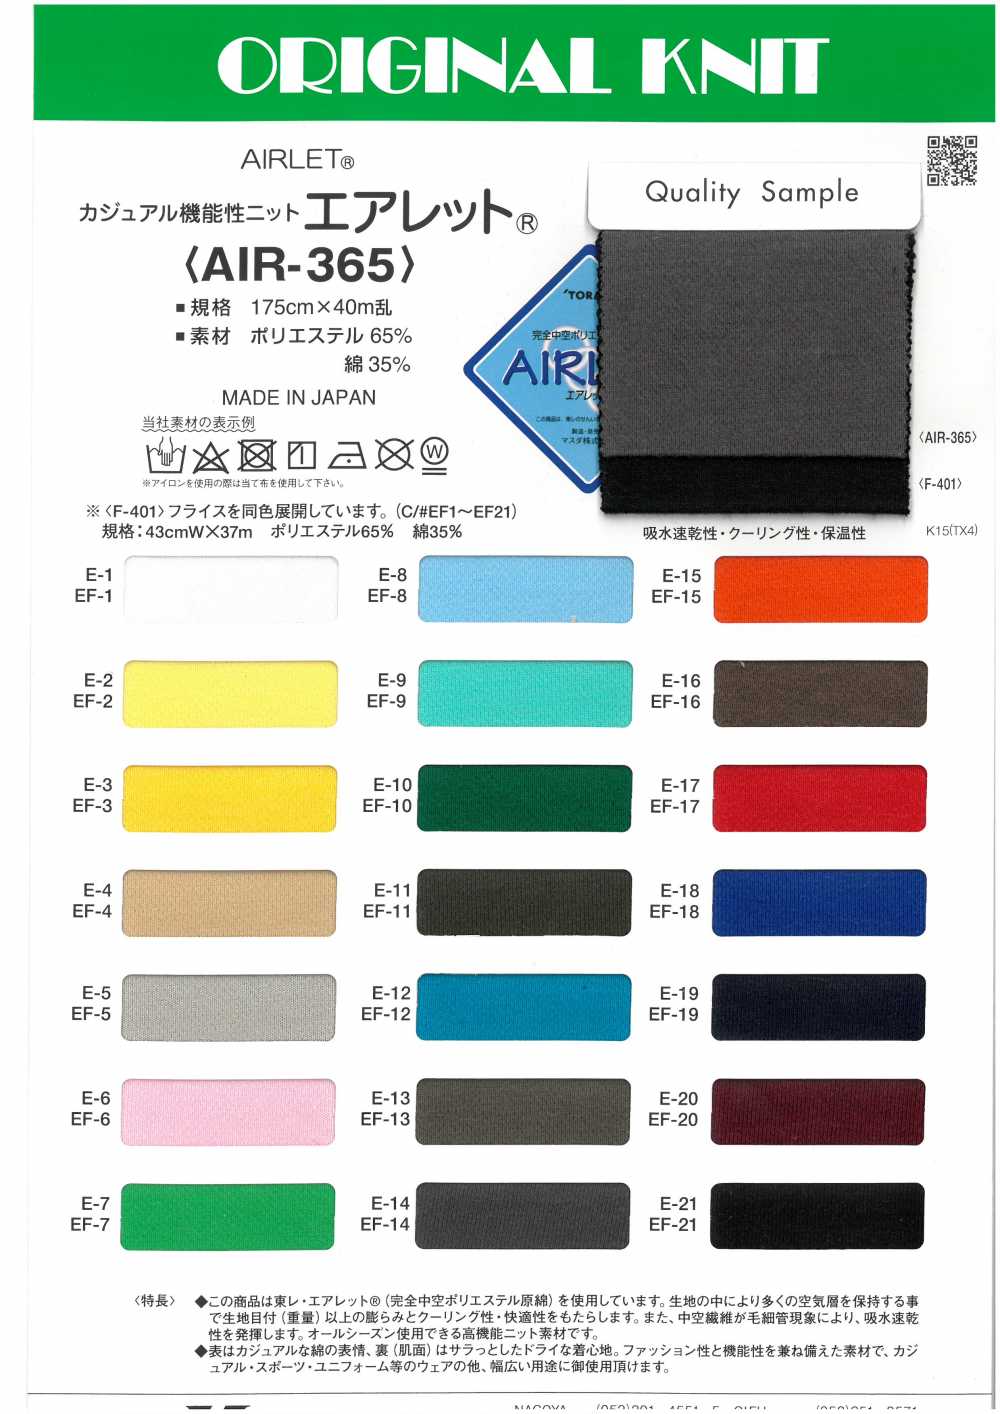 AIR-365 Casual Functional Knit Airlet[Textile / Fabric] Masuda